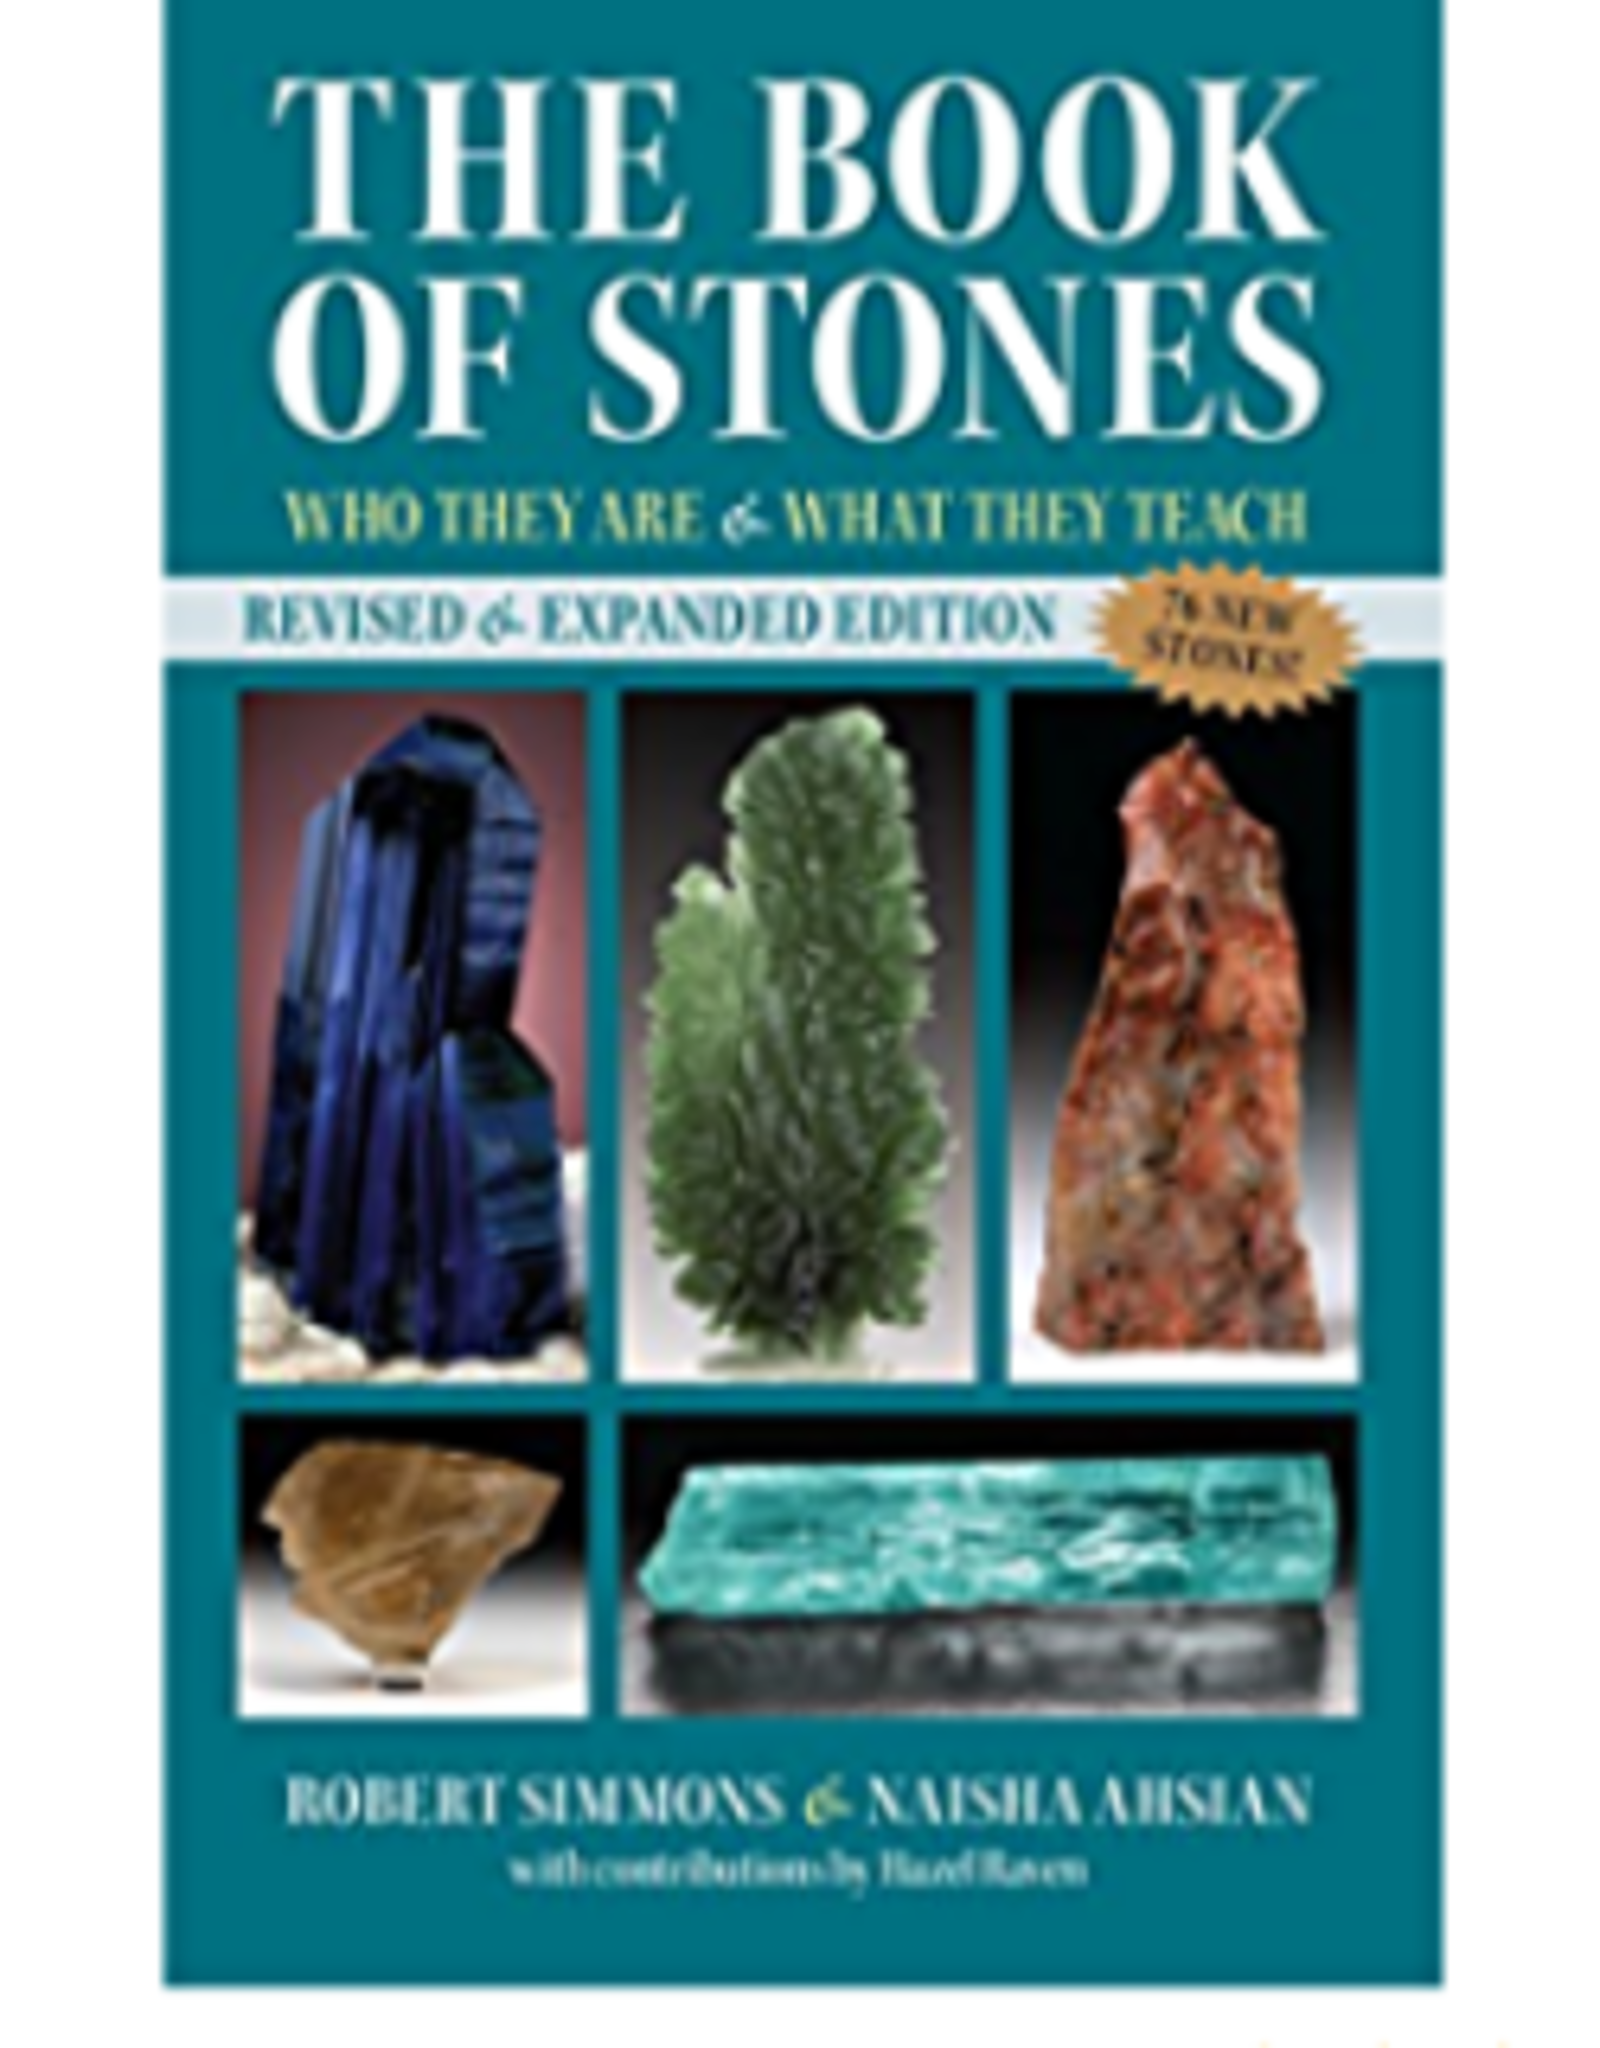 Robert Simmons Book of Stones by Robert Simmons & Naisha Ahsian